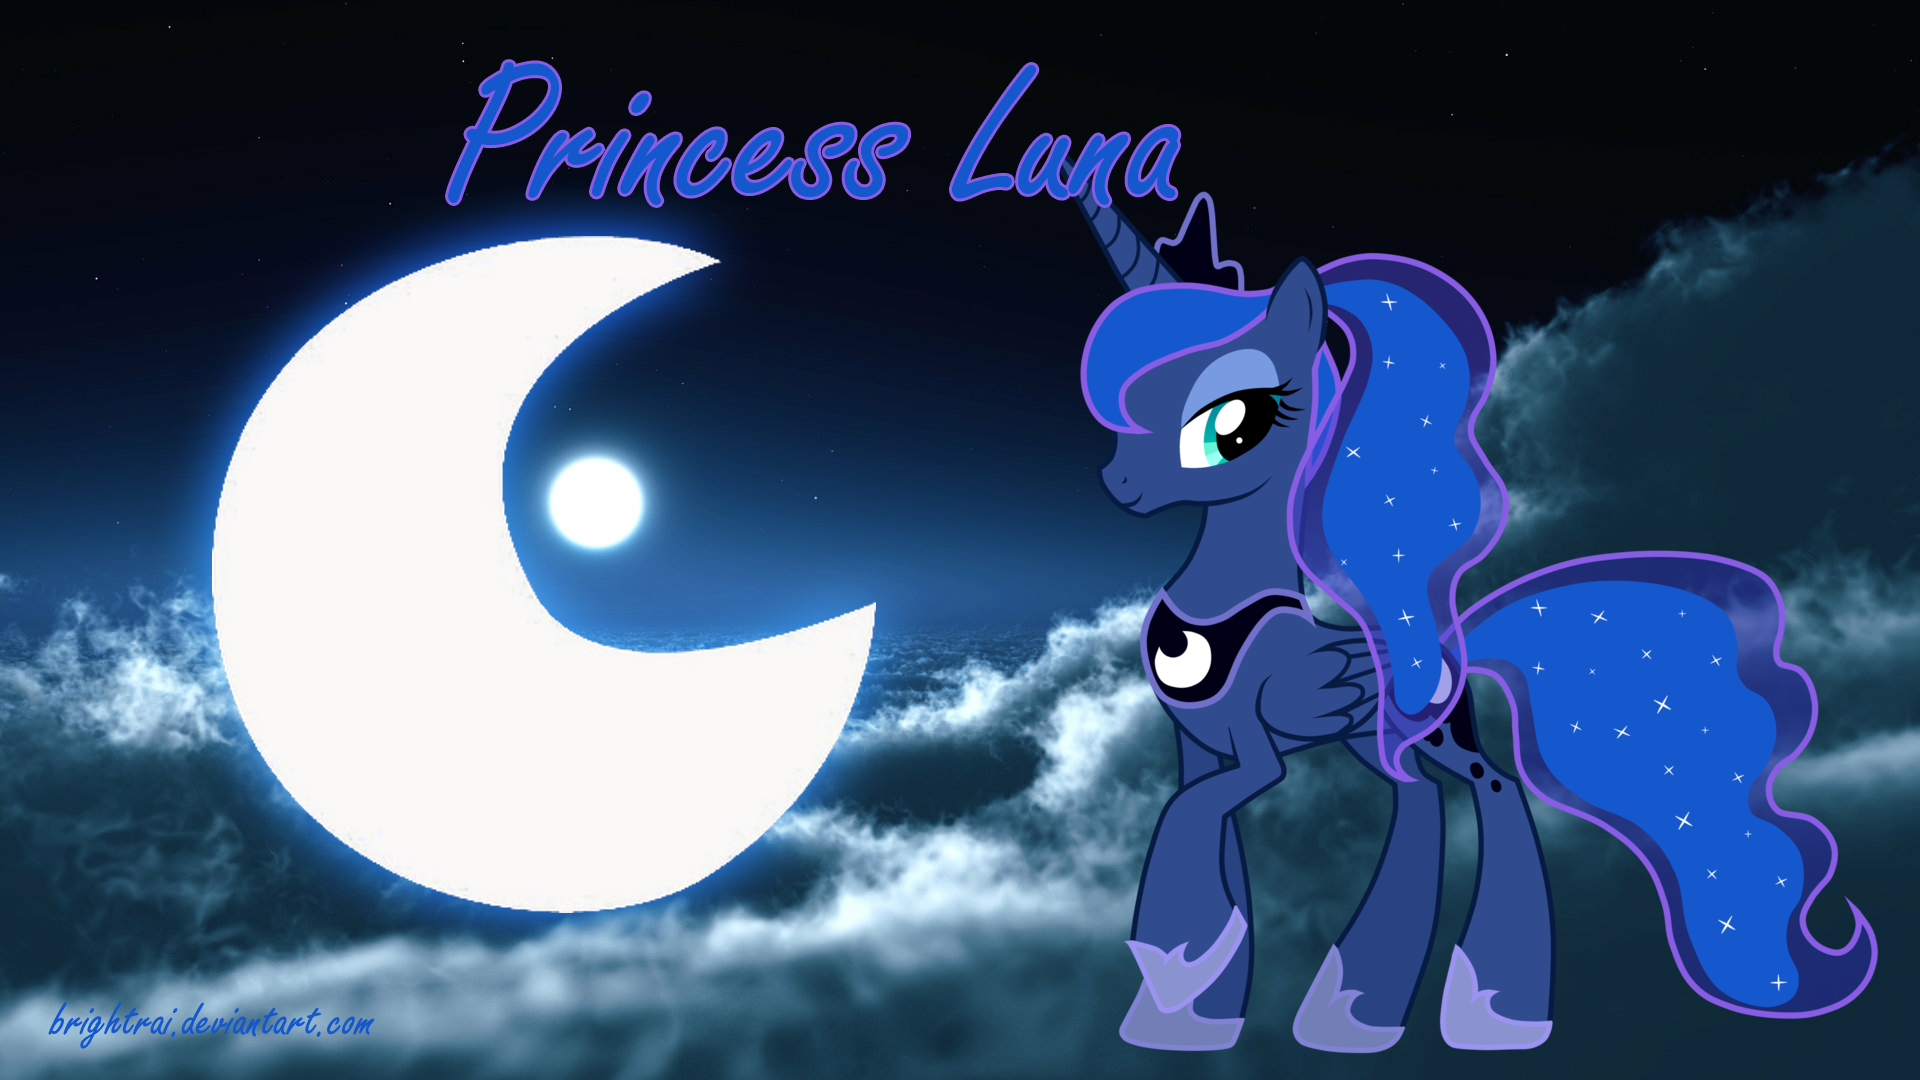 Princess Luna Ponytail Wallpaper by brightrai and JennieOo